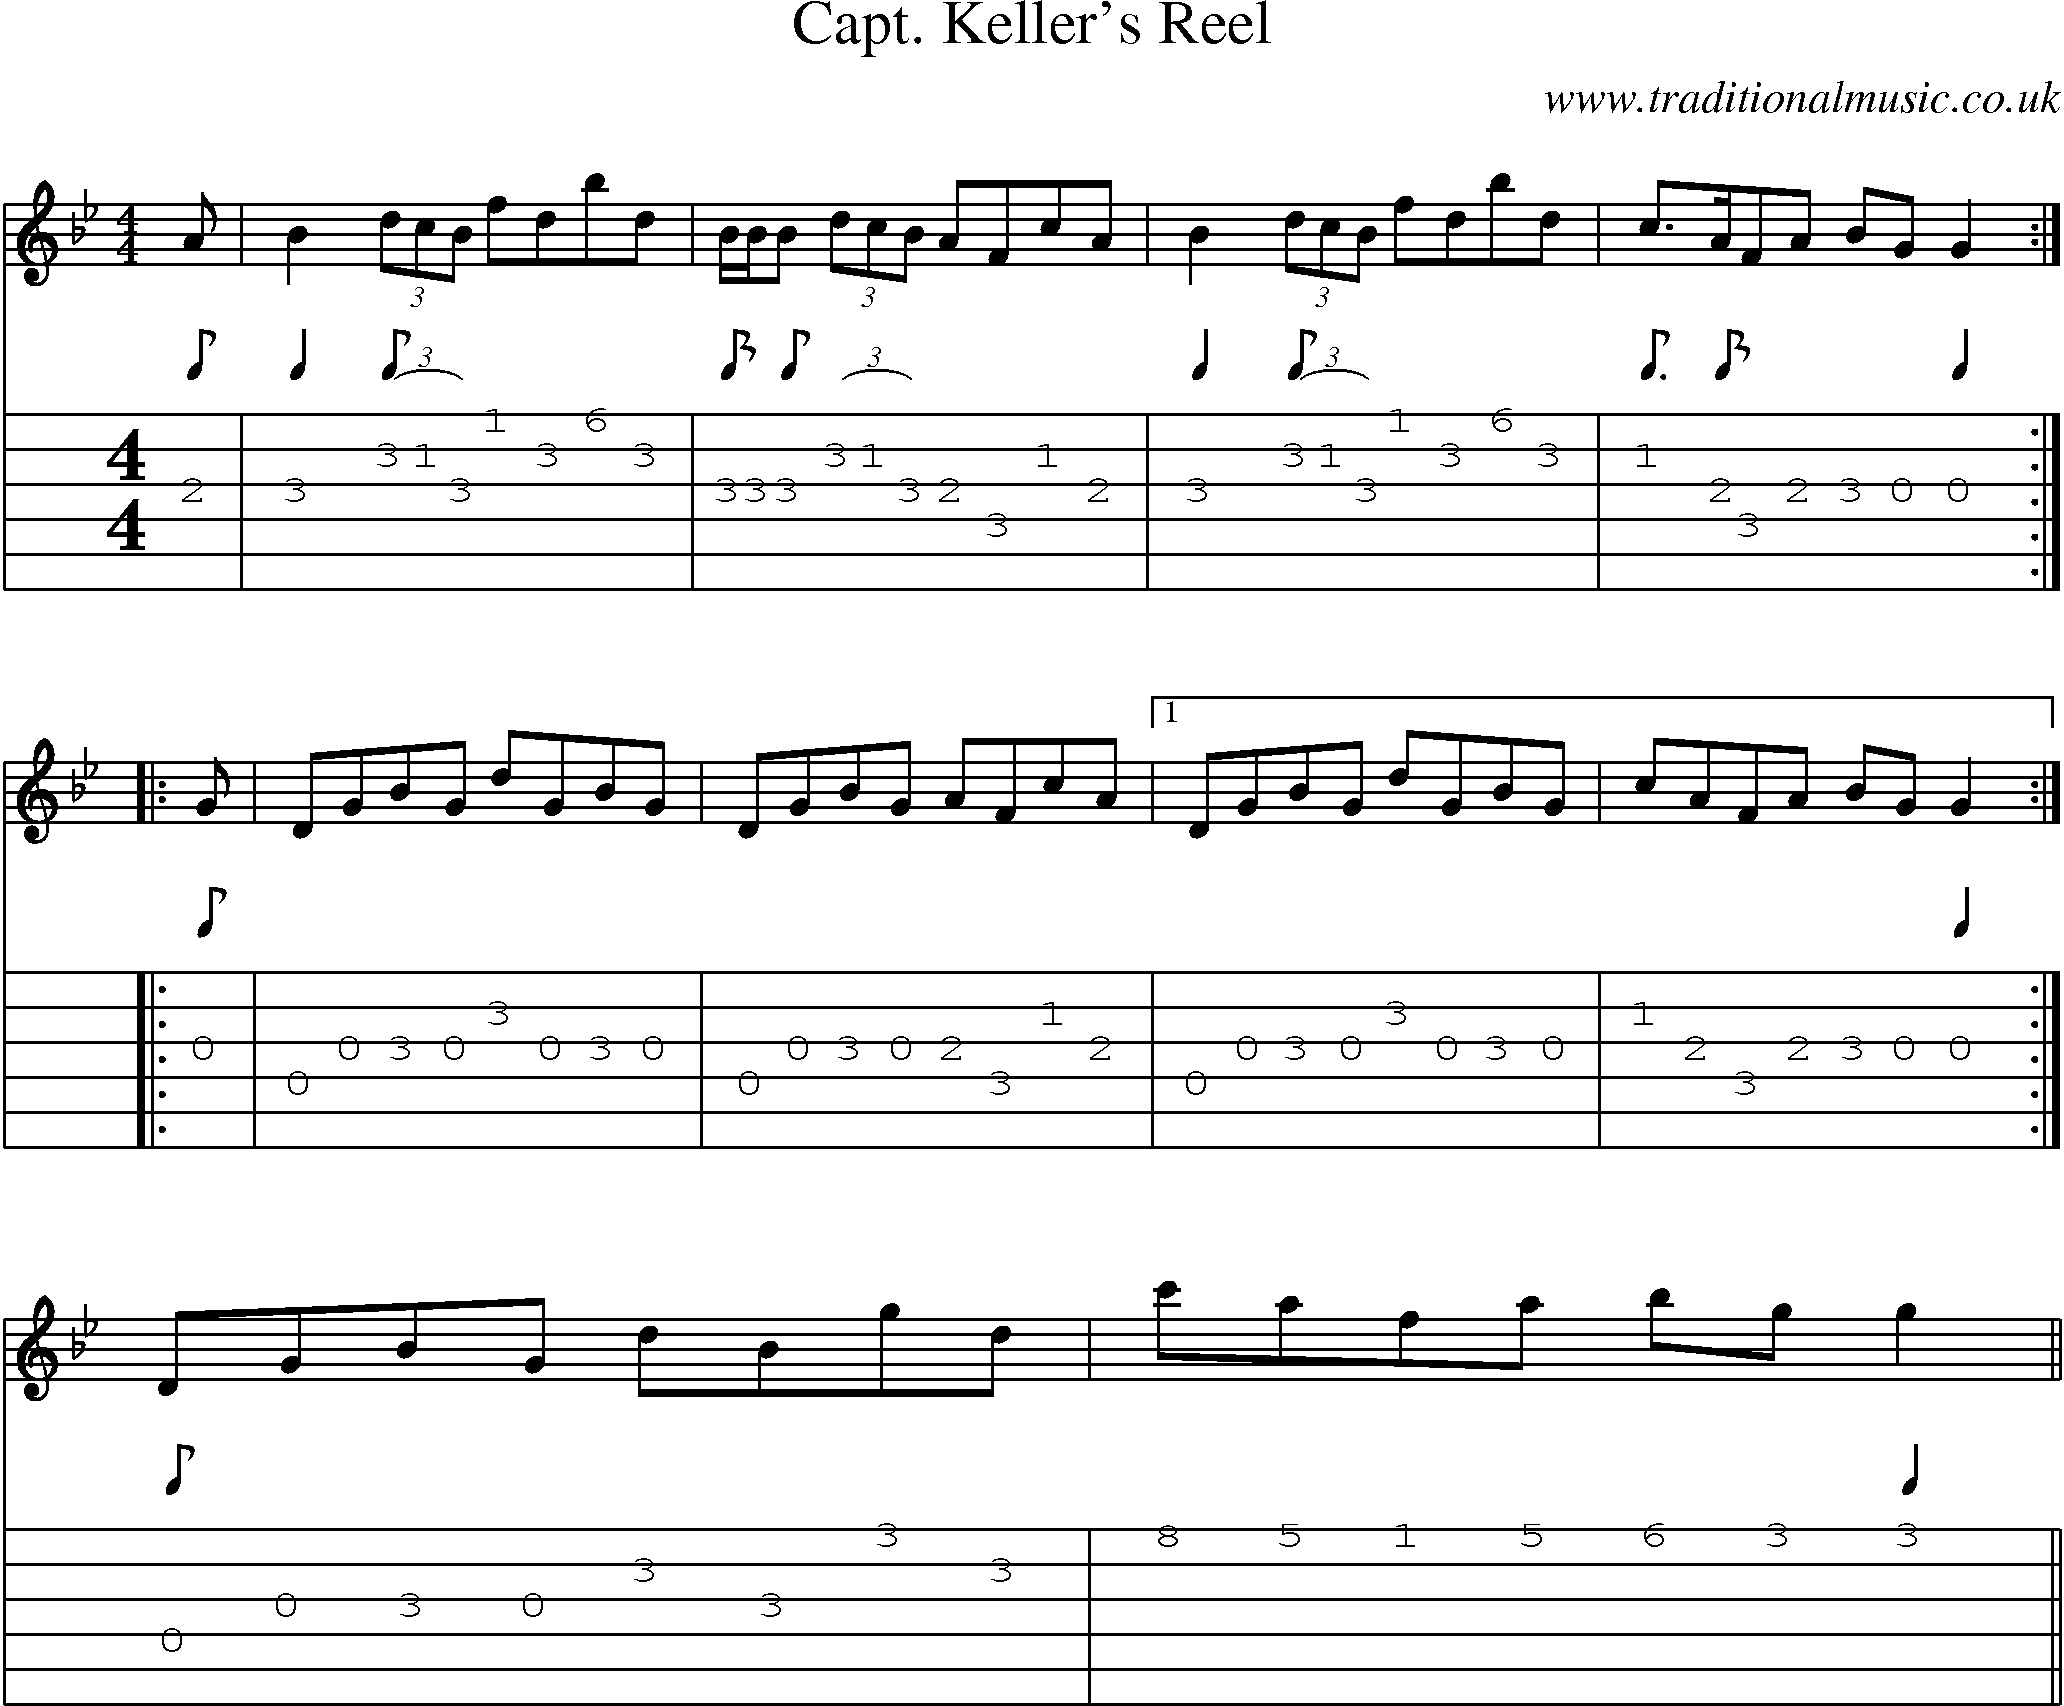 Music Score and Guitar Tabs for Capt Kellers Reel